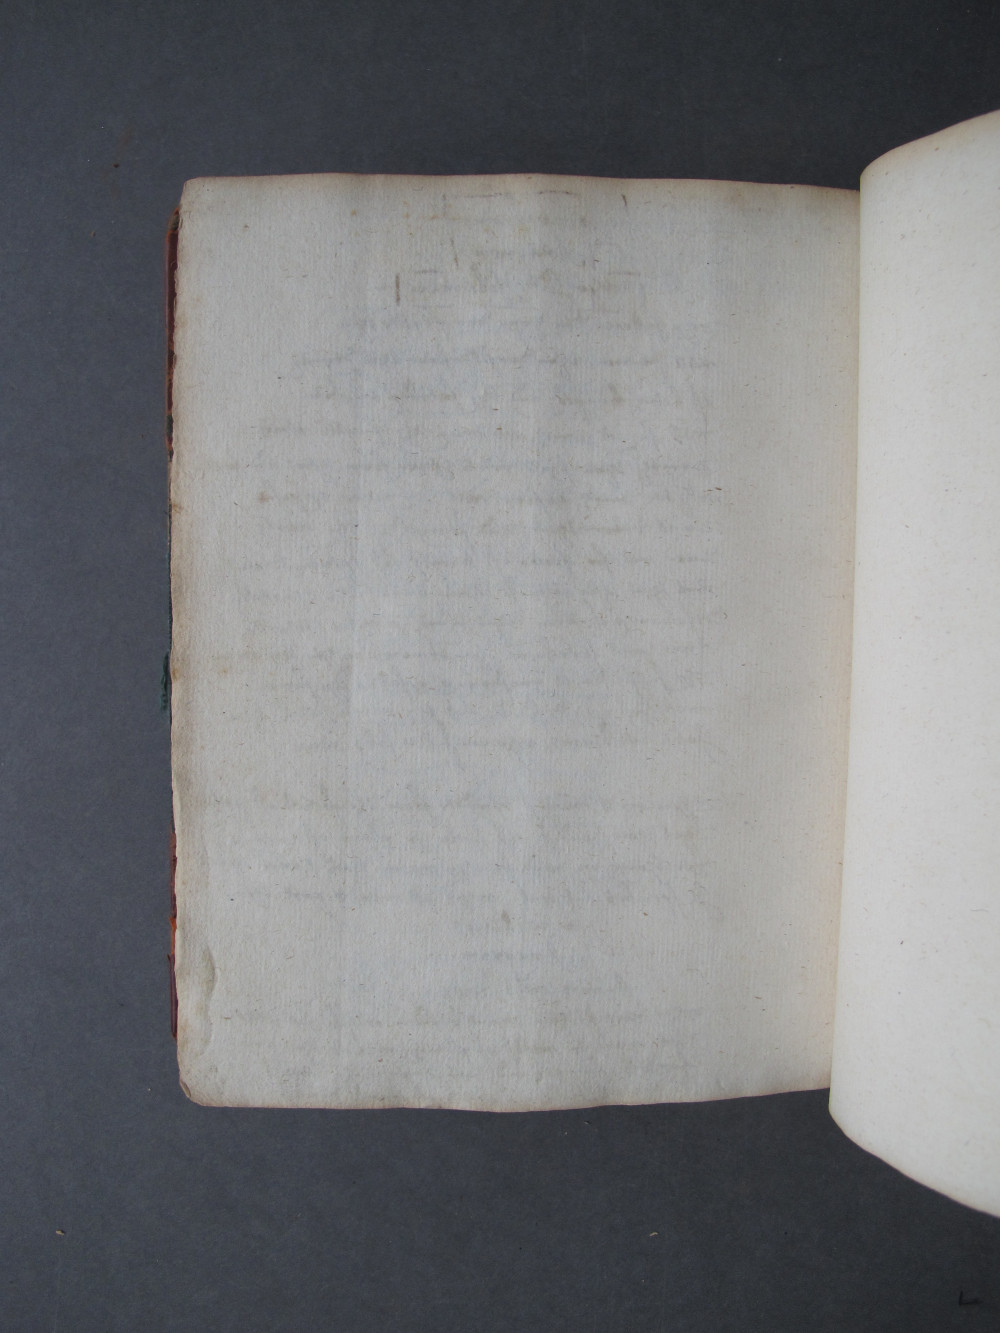 Folio 385 verso